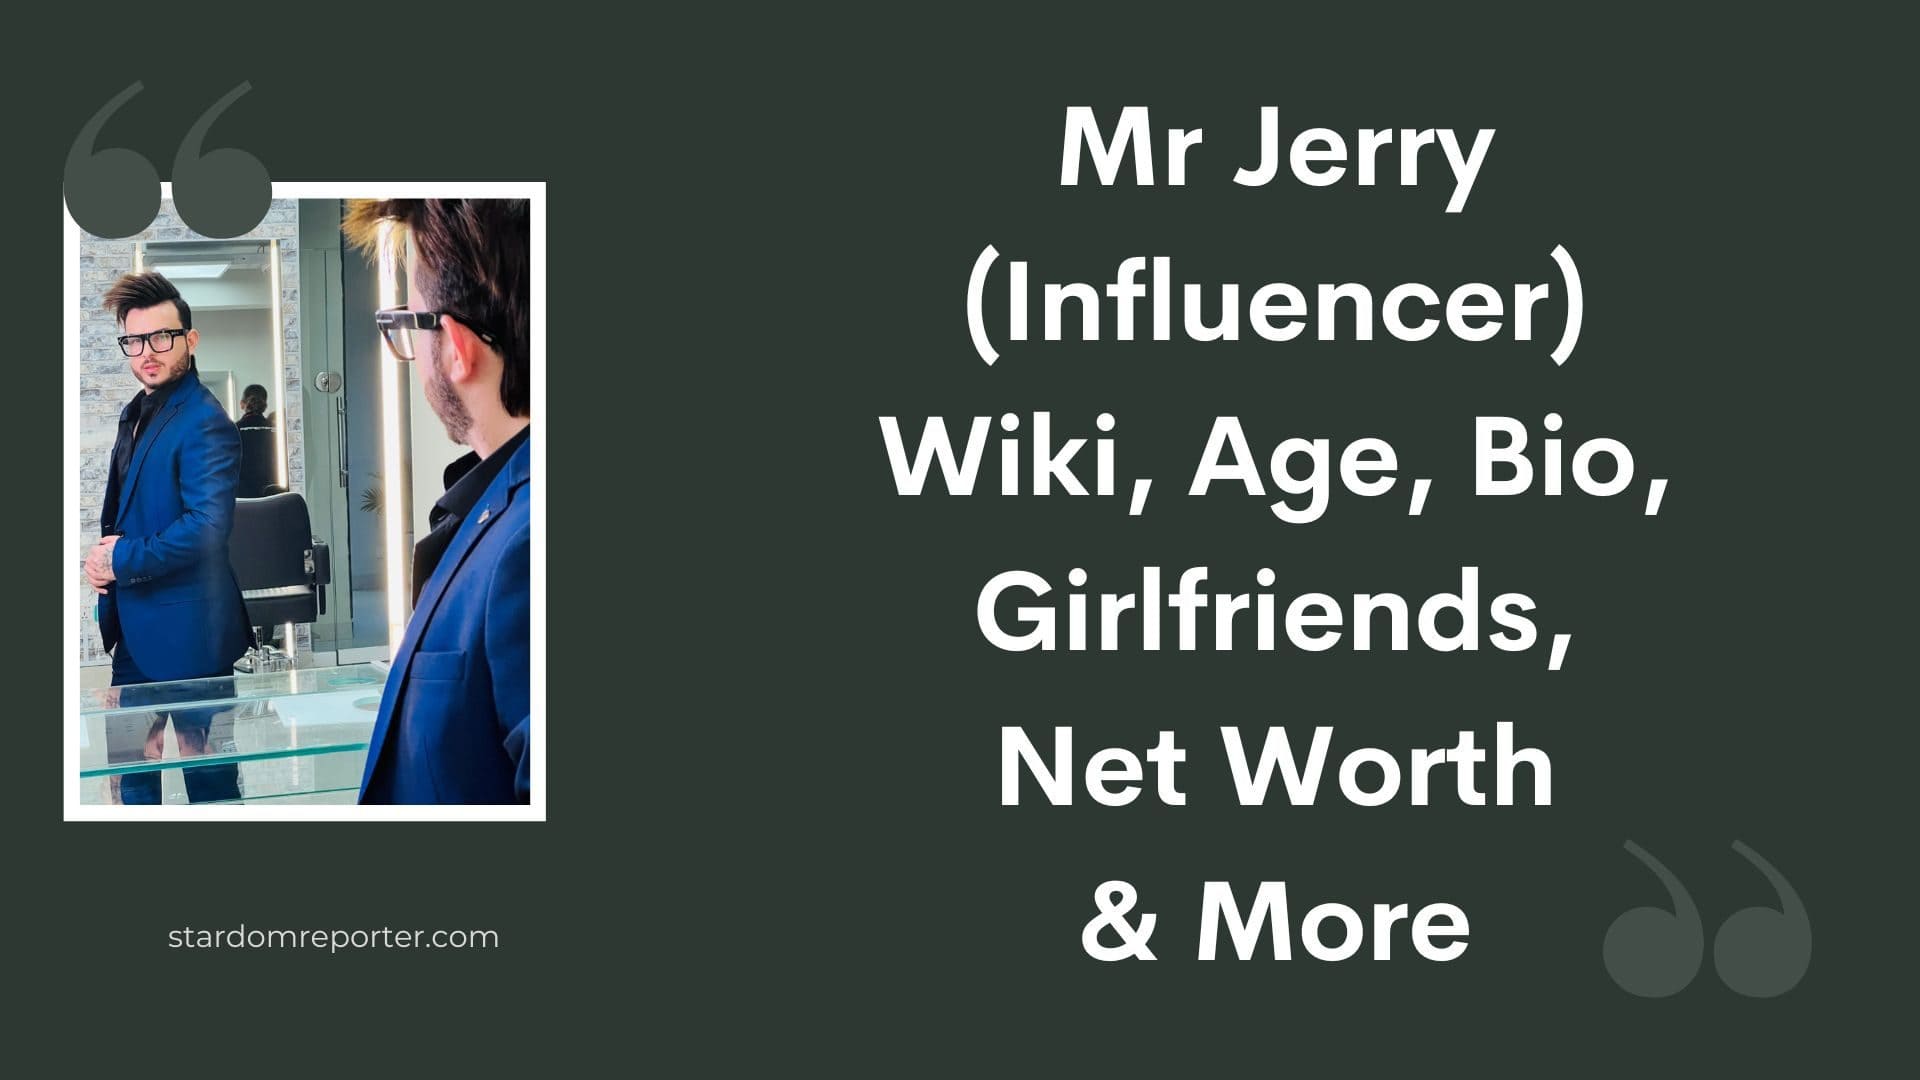 Mr Jerry (Influencer) Wiki, Age, Bio, Girlfriends, Net Worth & More - 43